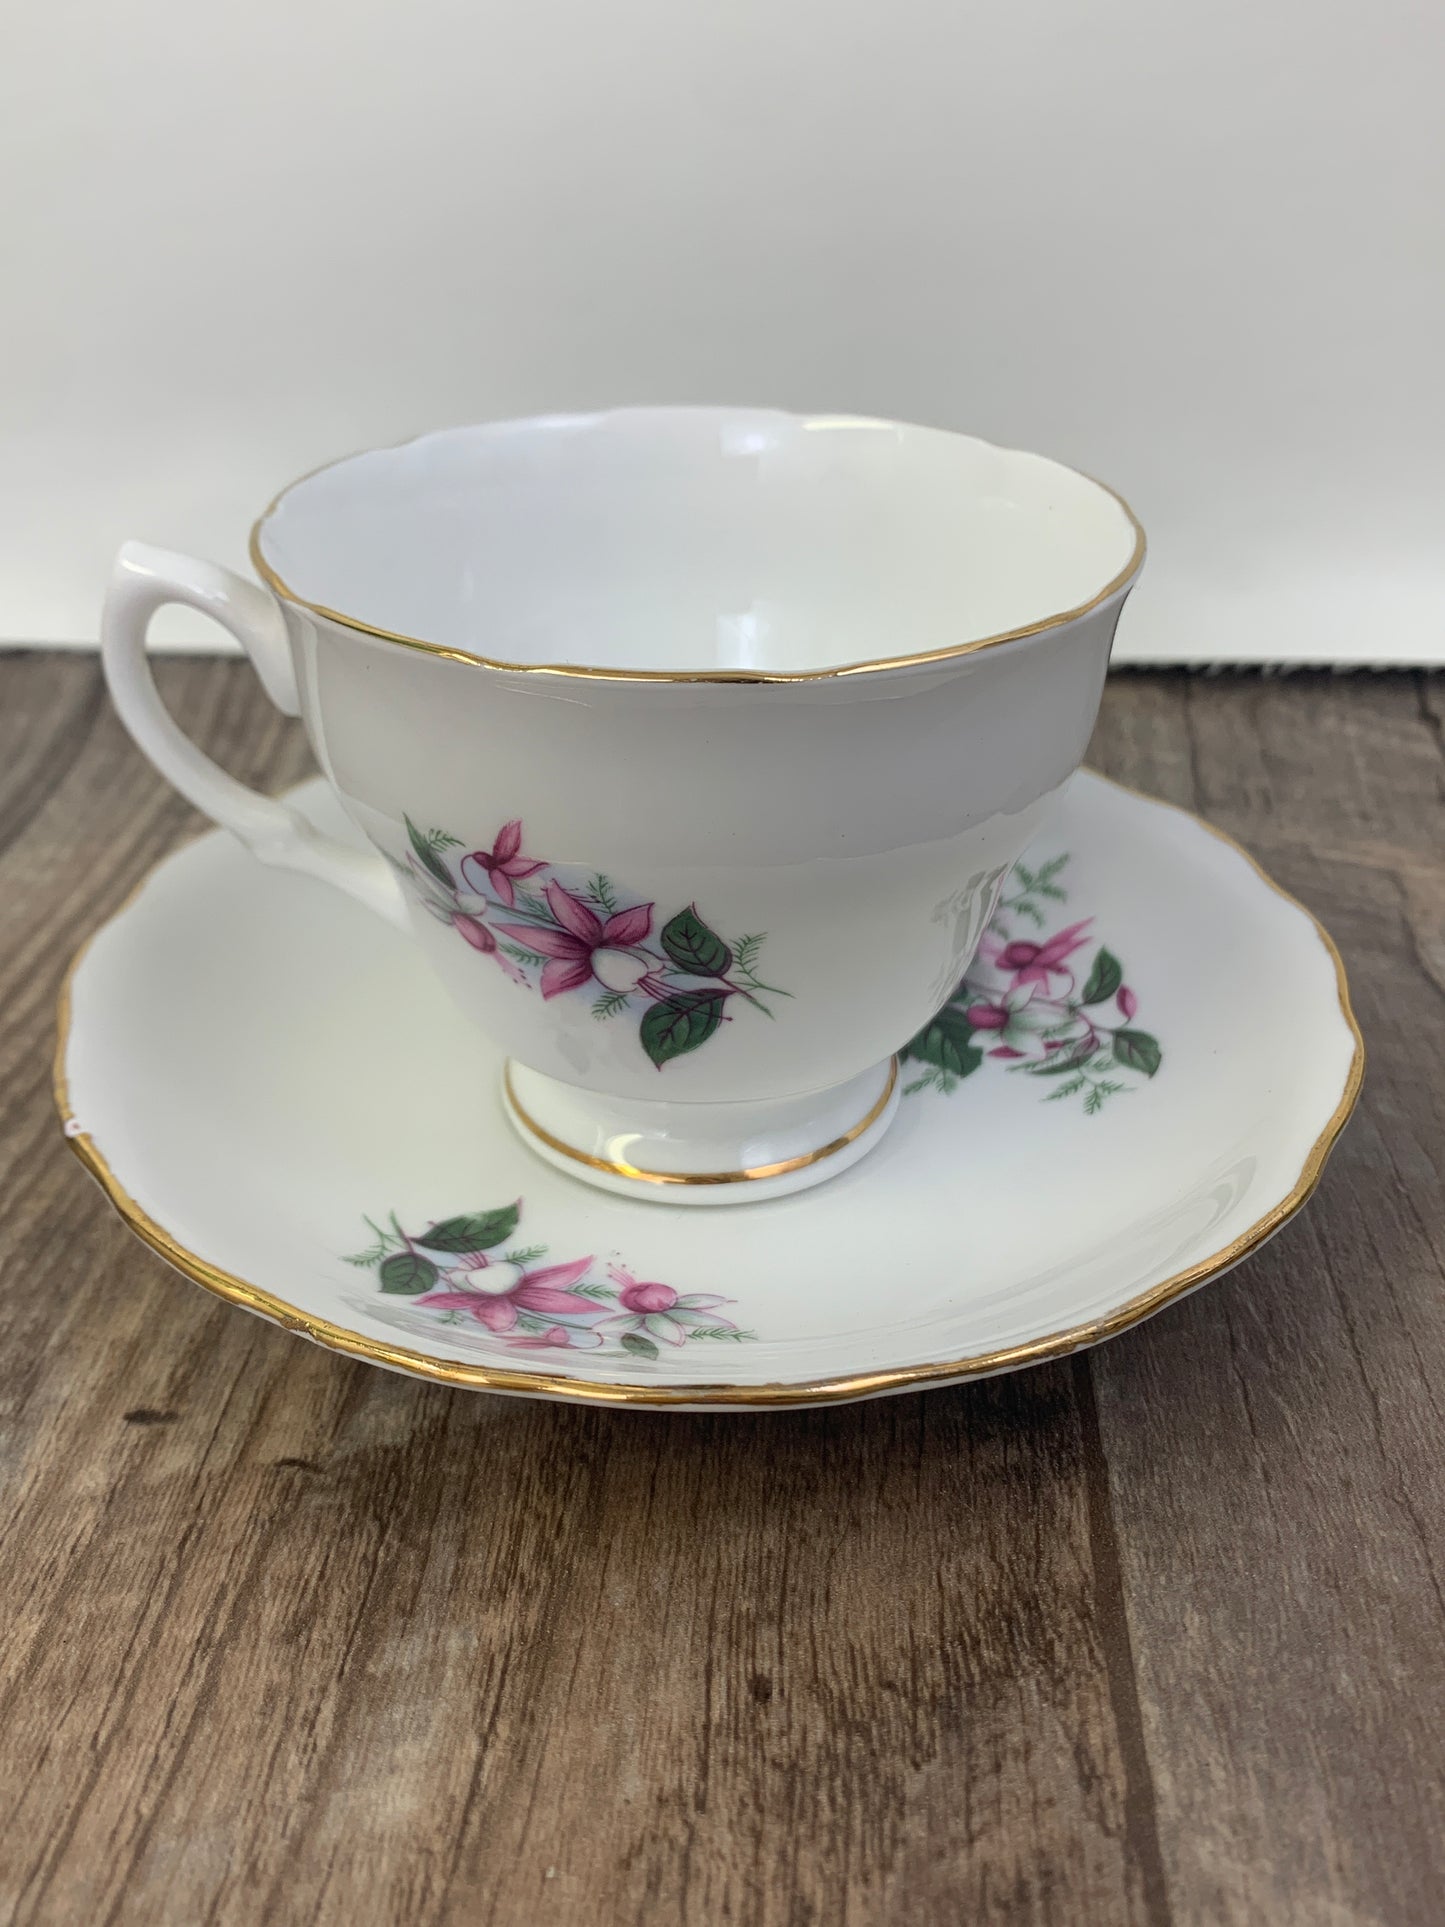 Vintage Teacup with Blue Roses Vintage Royal Vale English Tea Cup Vintage Gifts